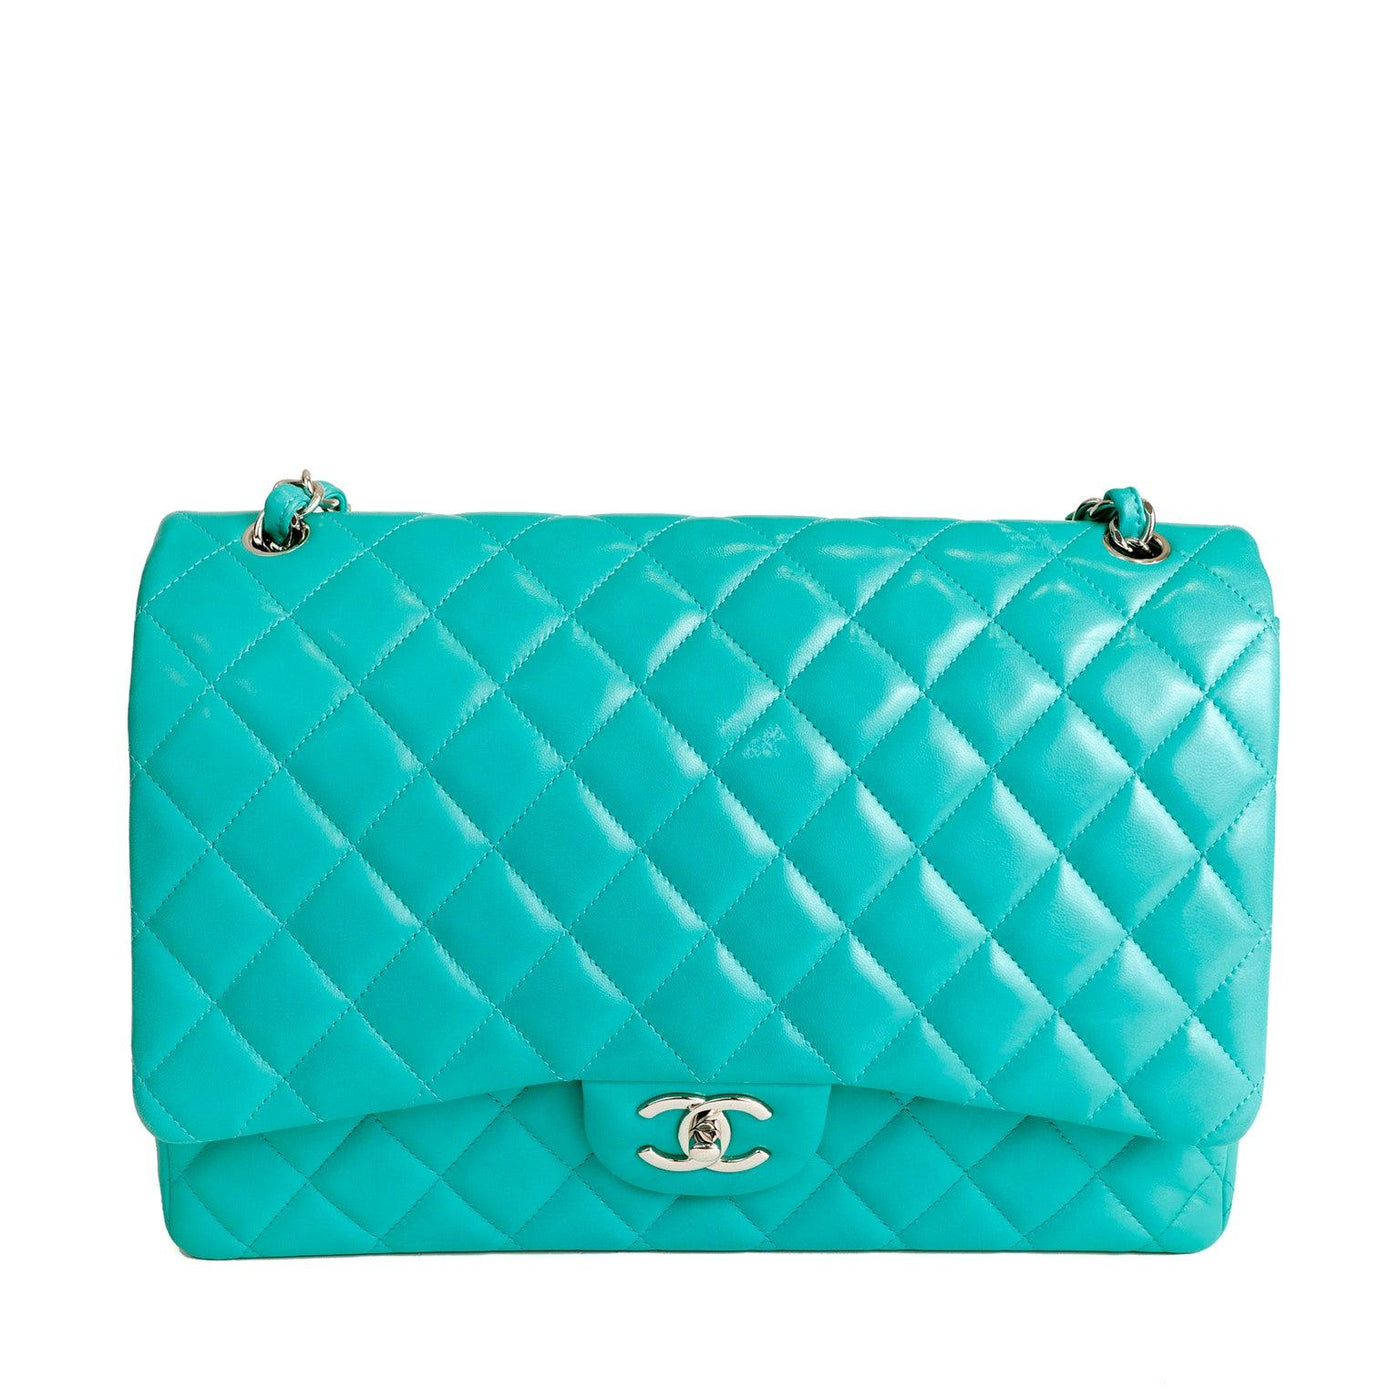 Chanel Lagoon Green Lambskin Maxi Classic Flap Bag - Only Authentics